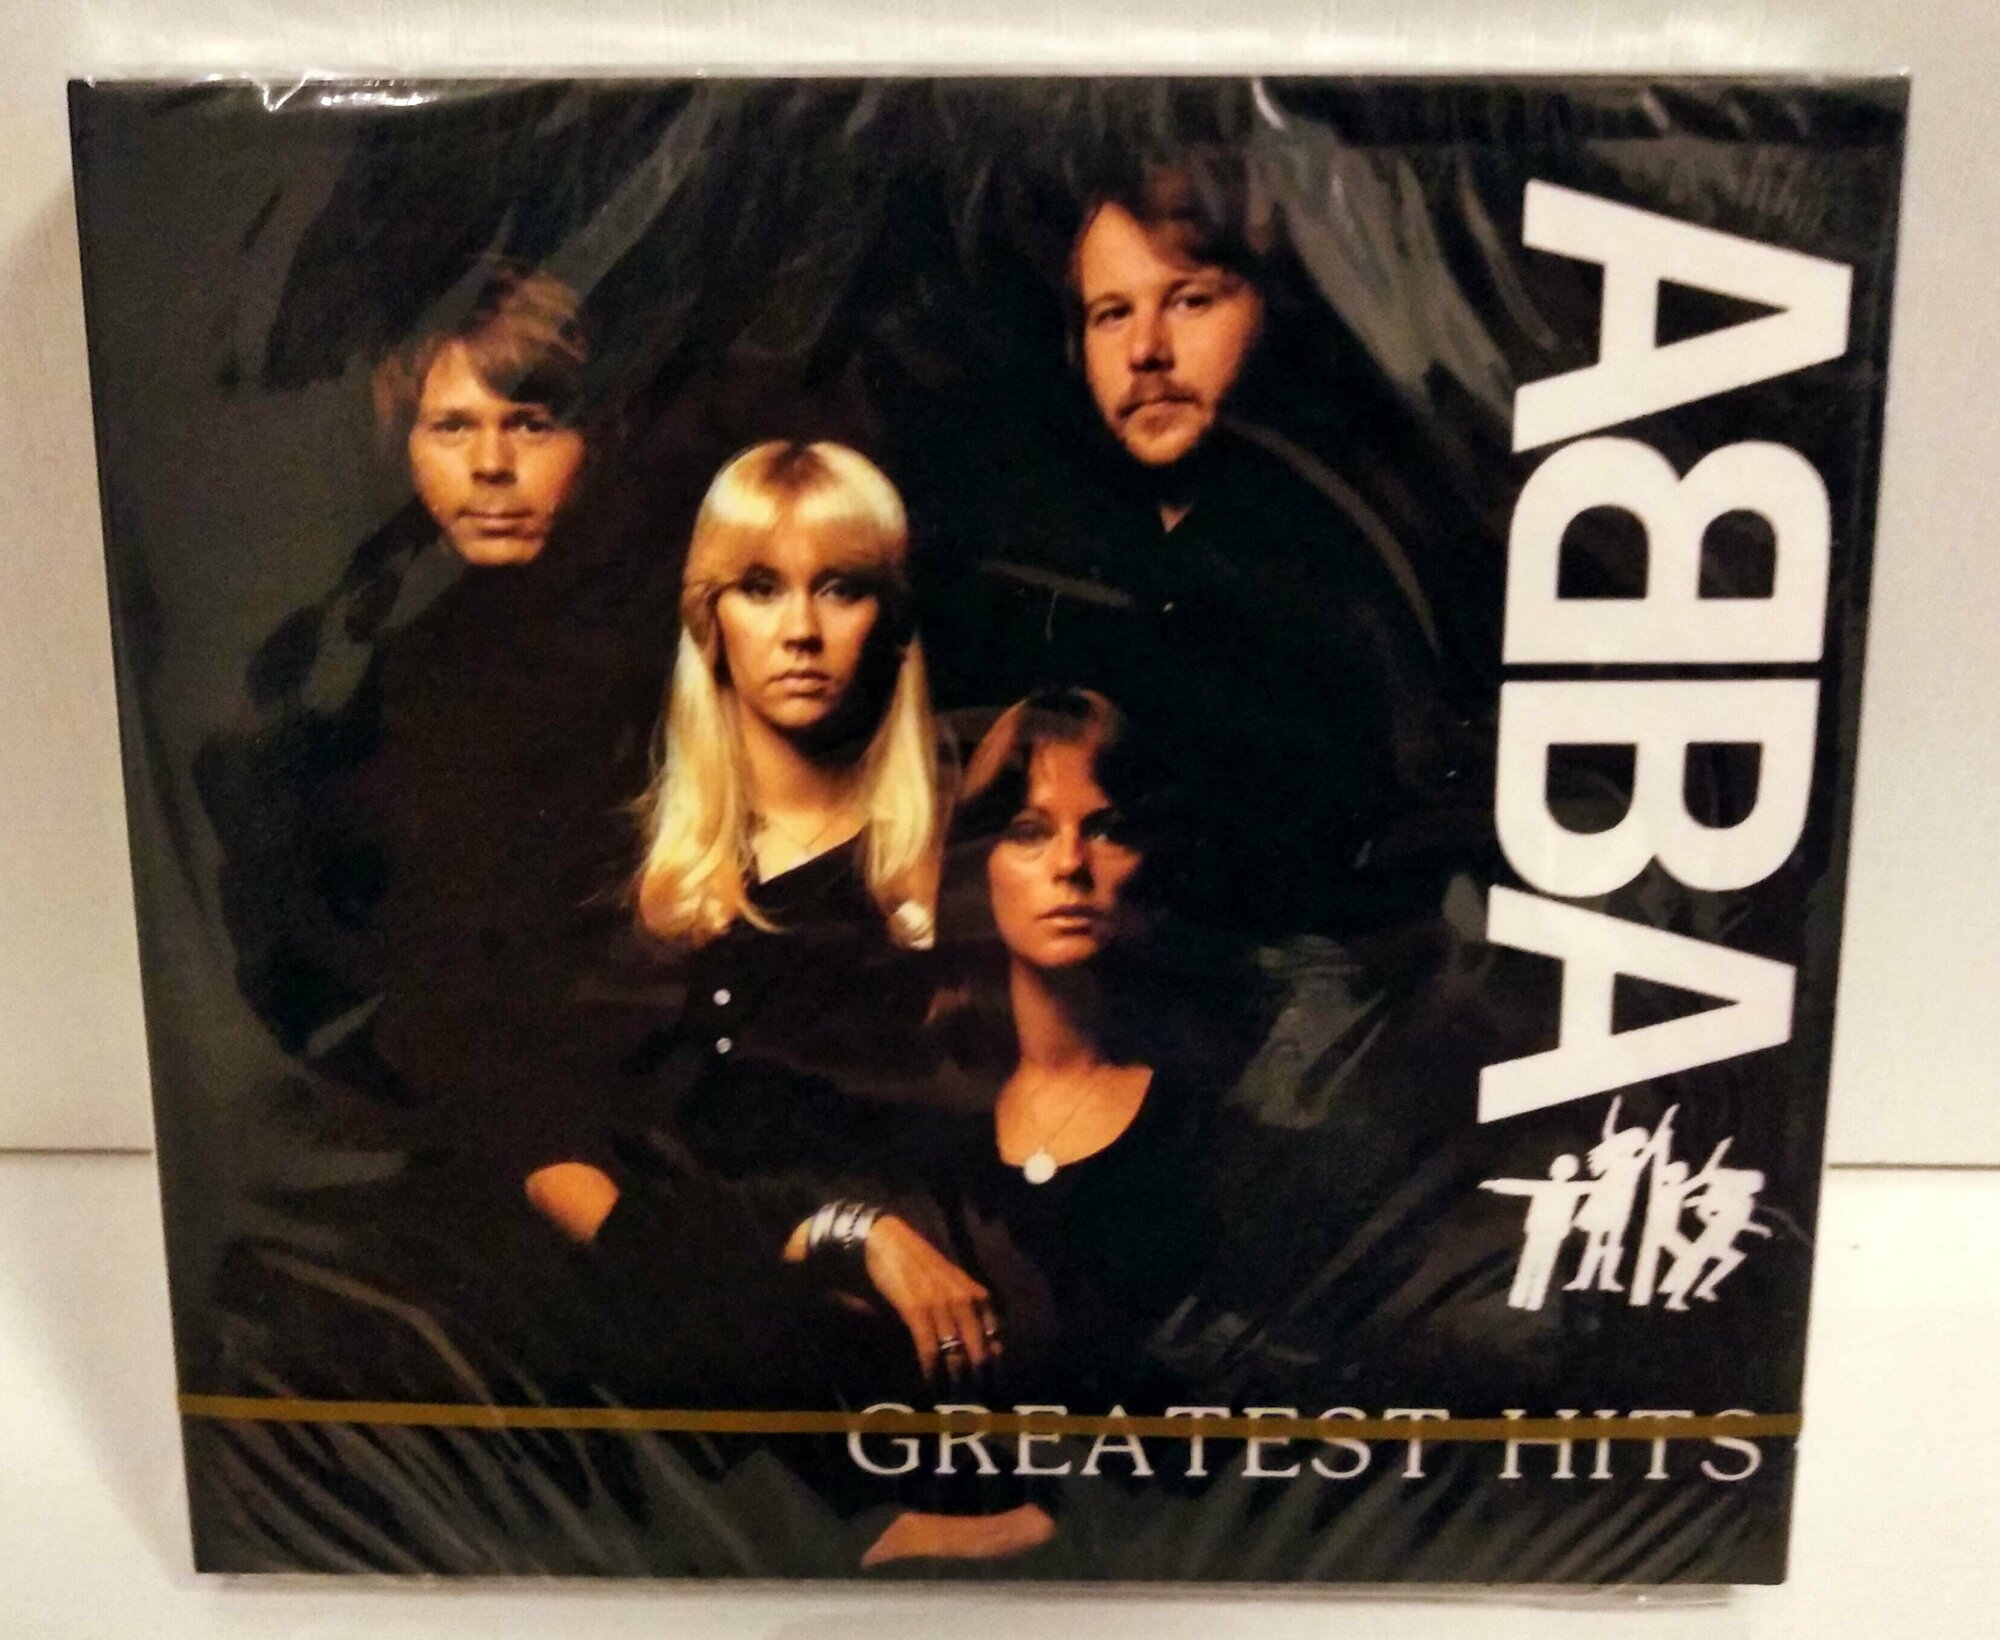 ABBA "Greatest Hits" 2 CD